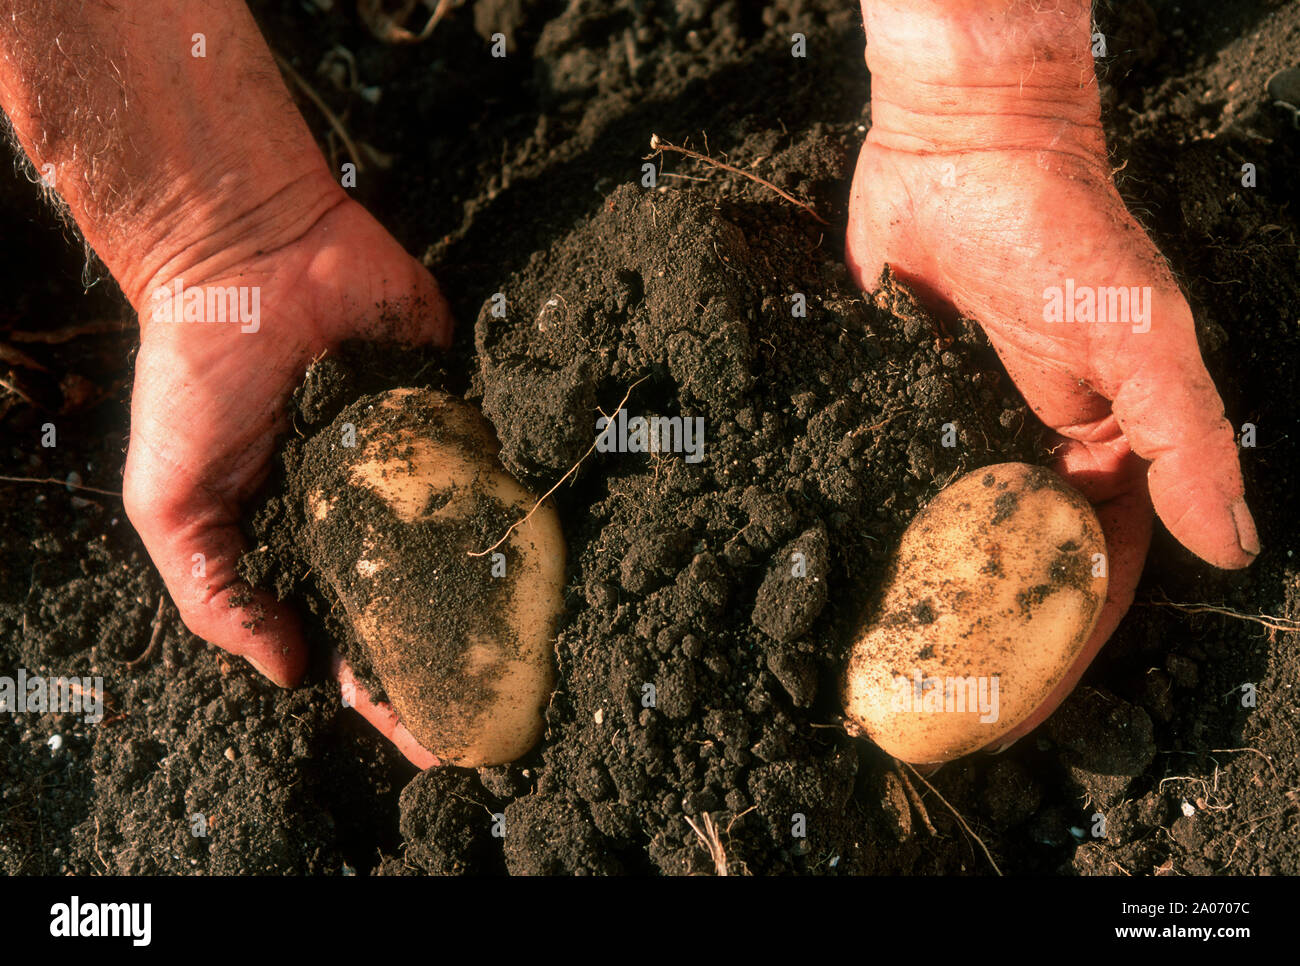 Dirty hands of gardener holding potatoes Stock Photo